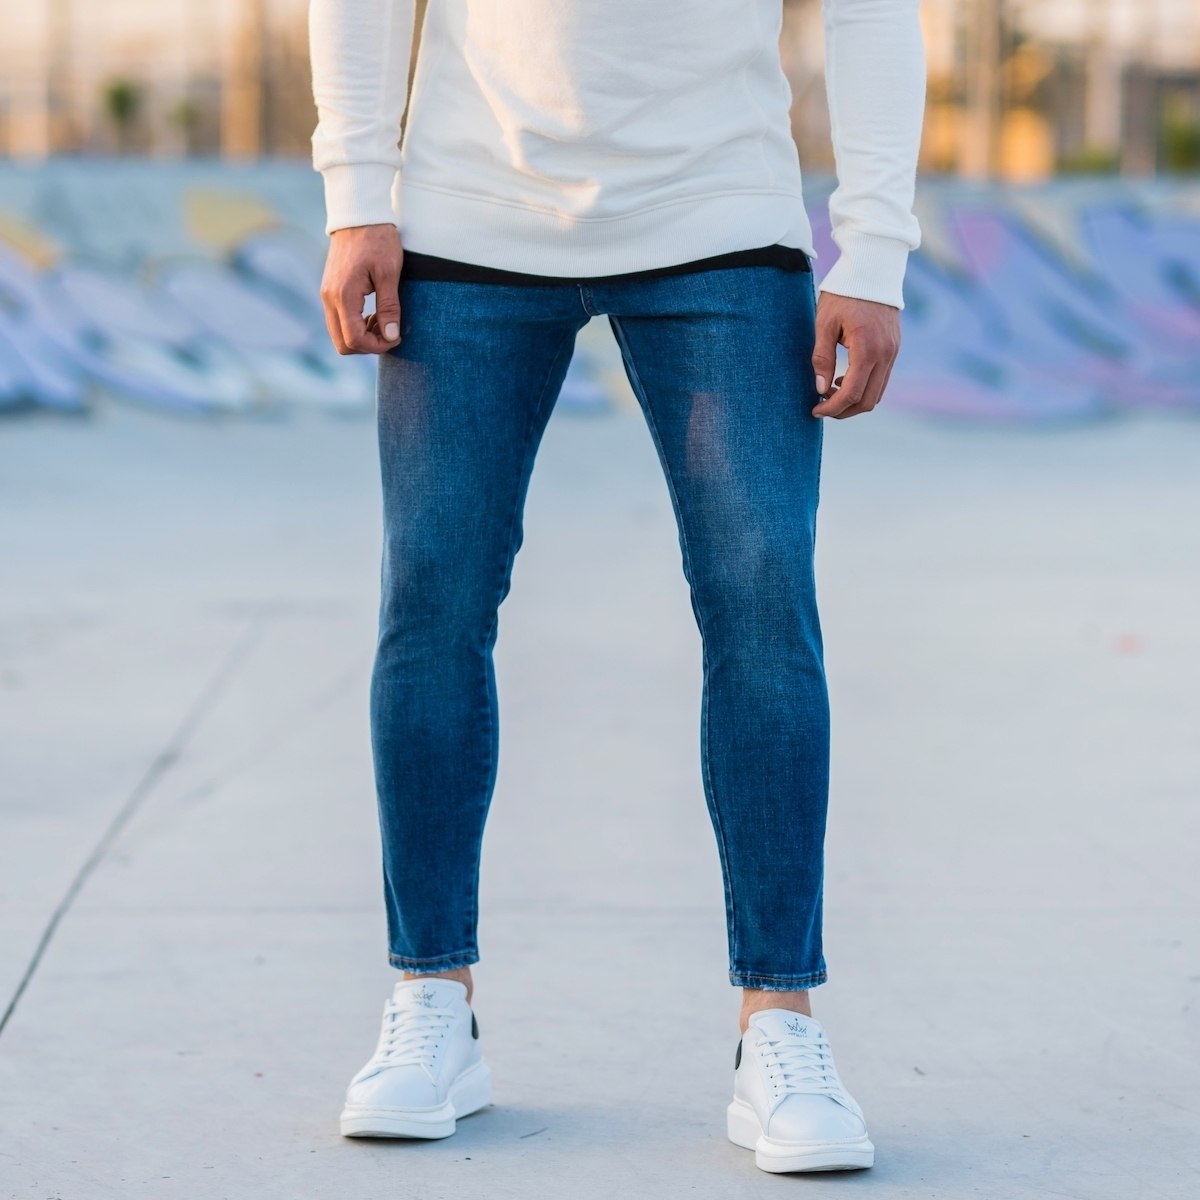 Men's Vintage Skinny Jeans In Navy Blue